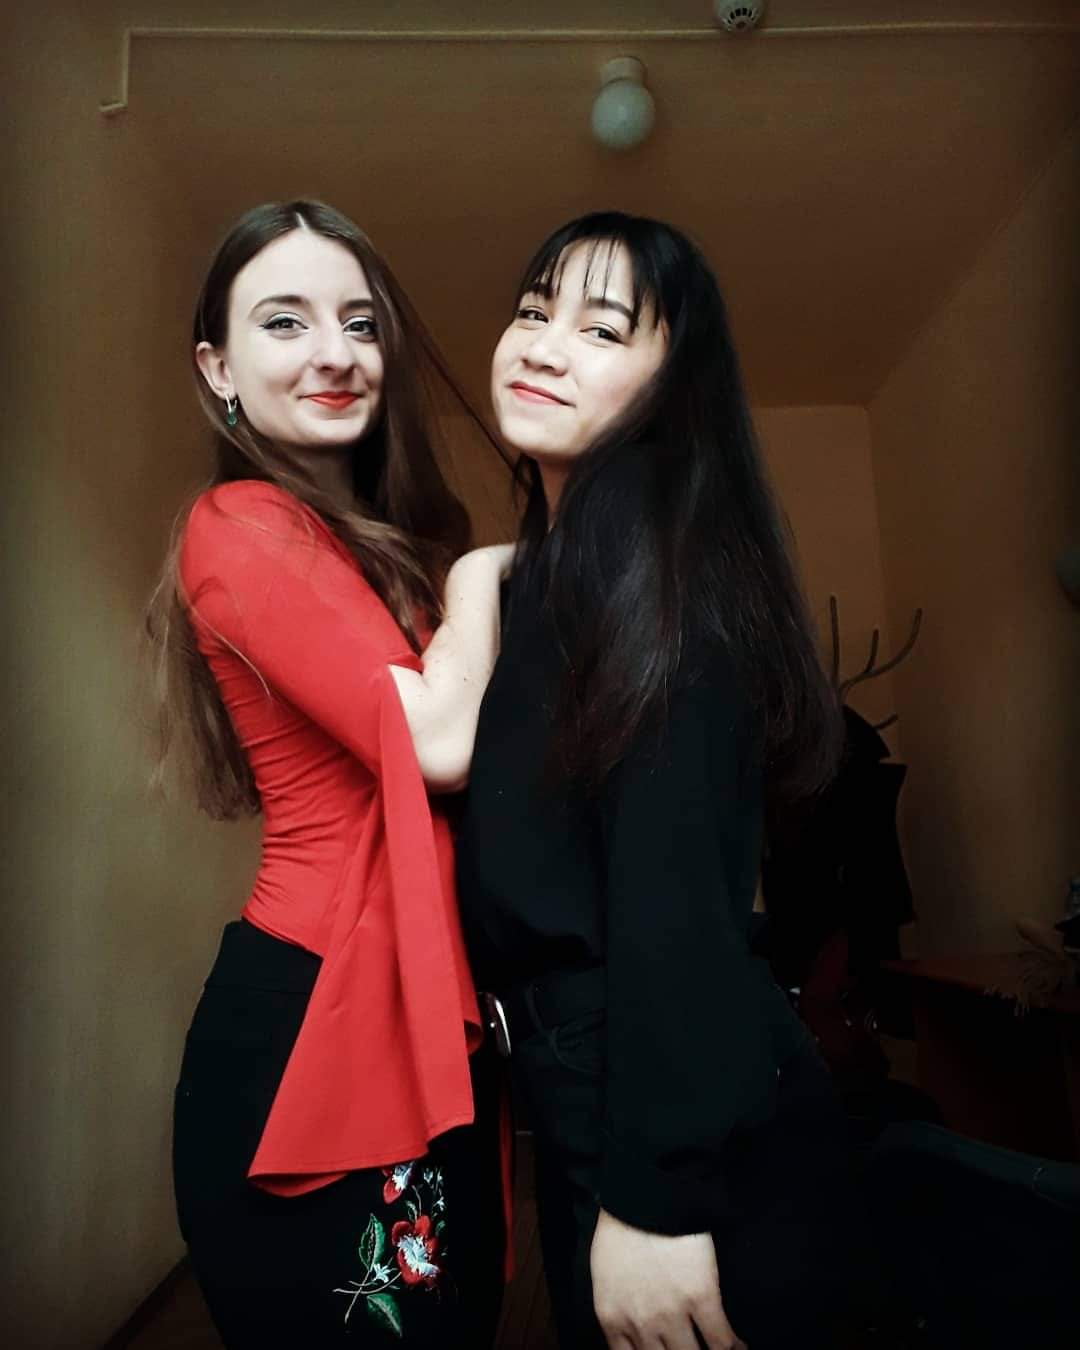 Milanka and her friend, pianist Hoa Ngoc Ha before a concert in Bucharest, Romania